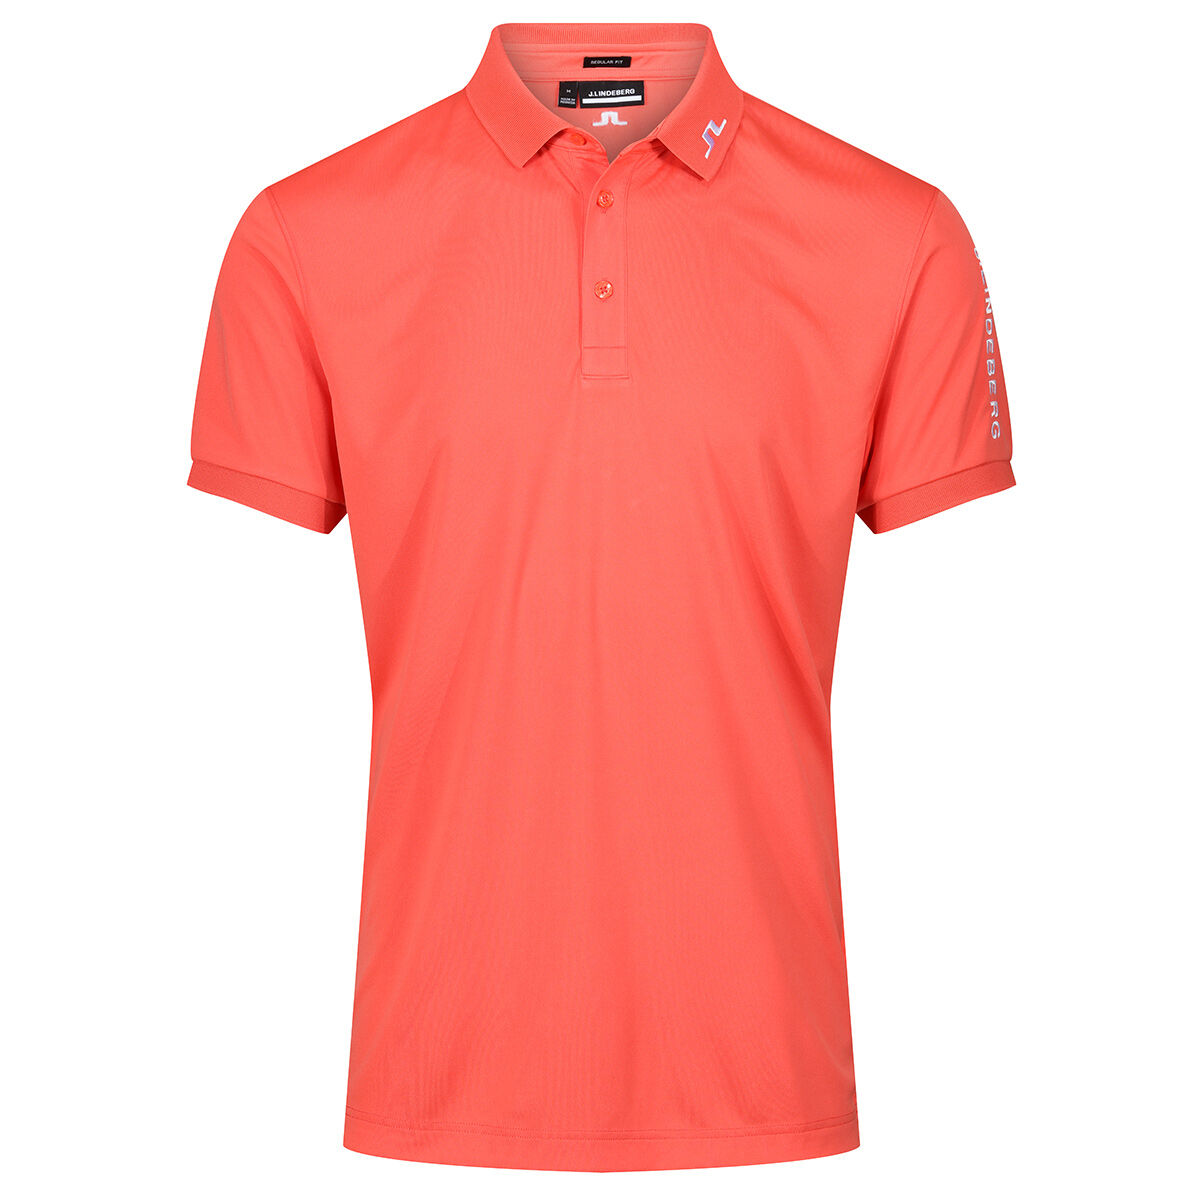 J.Lindeberg Men’s Tour Tech Golf Polo Shirt, Mens, Hot coral, Large | American Golf